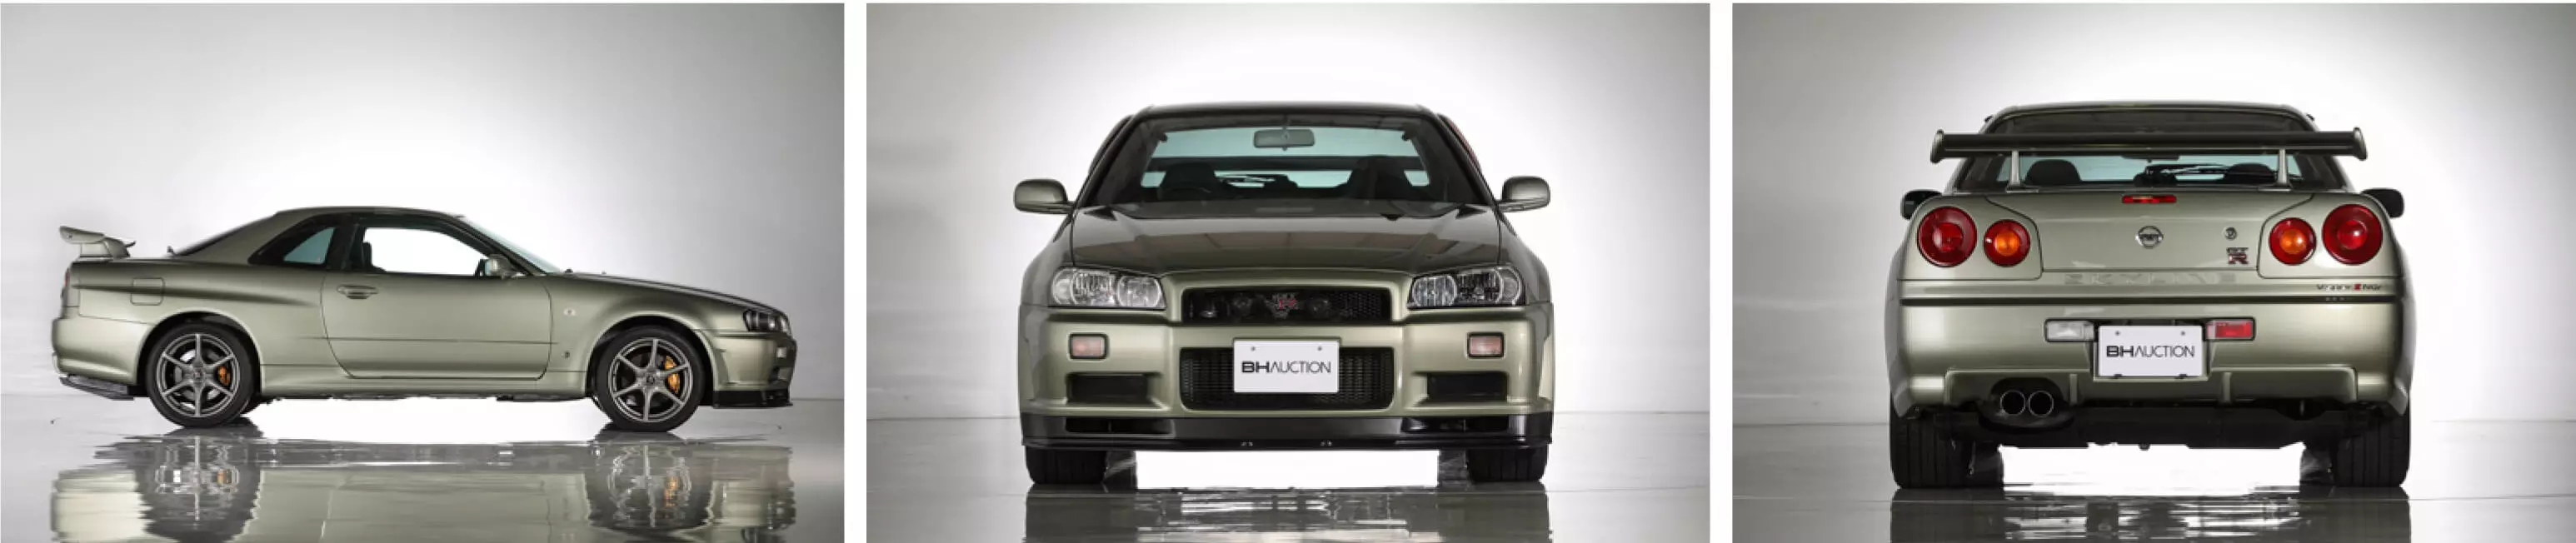 Nissan Skyline GT-R R34 de 2002